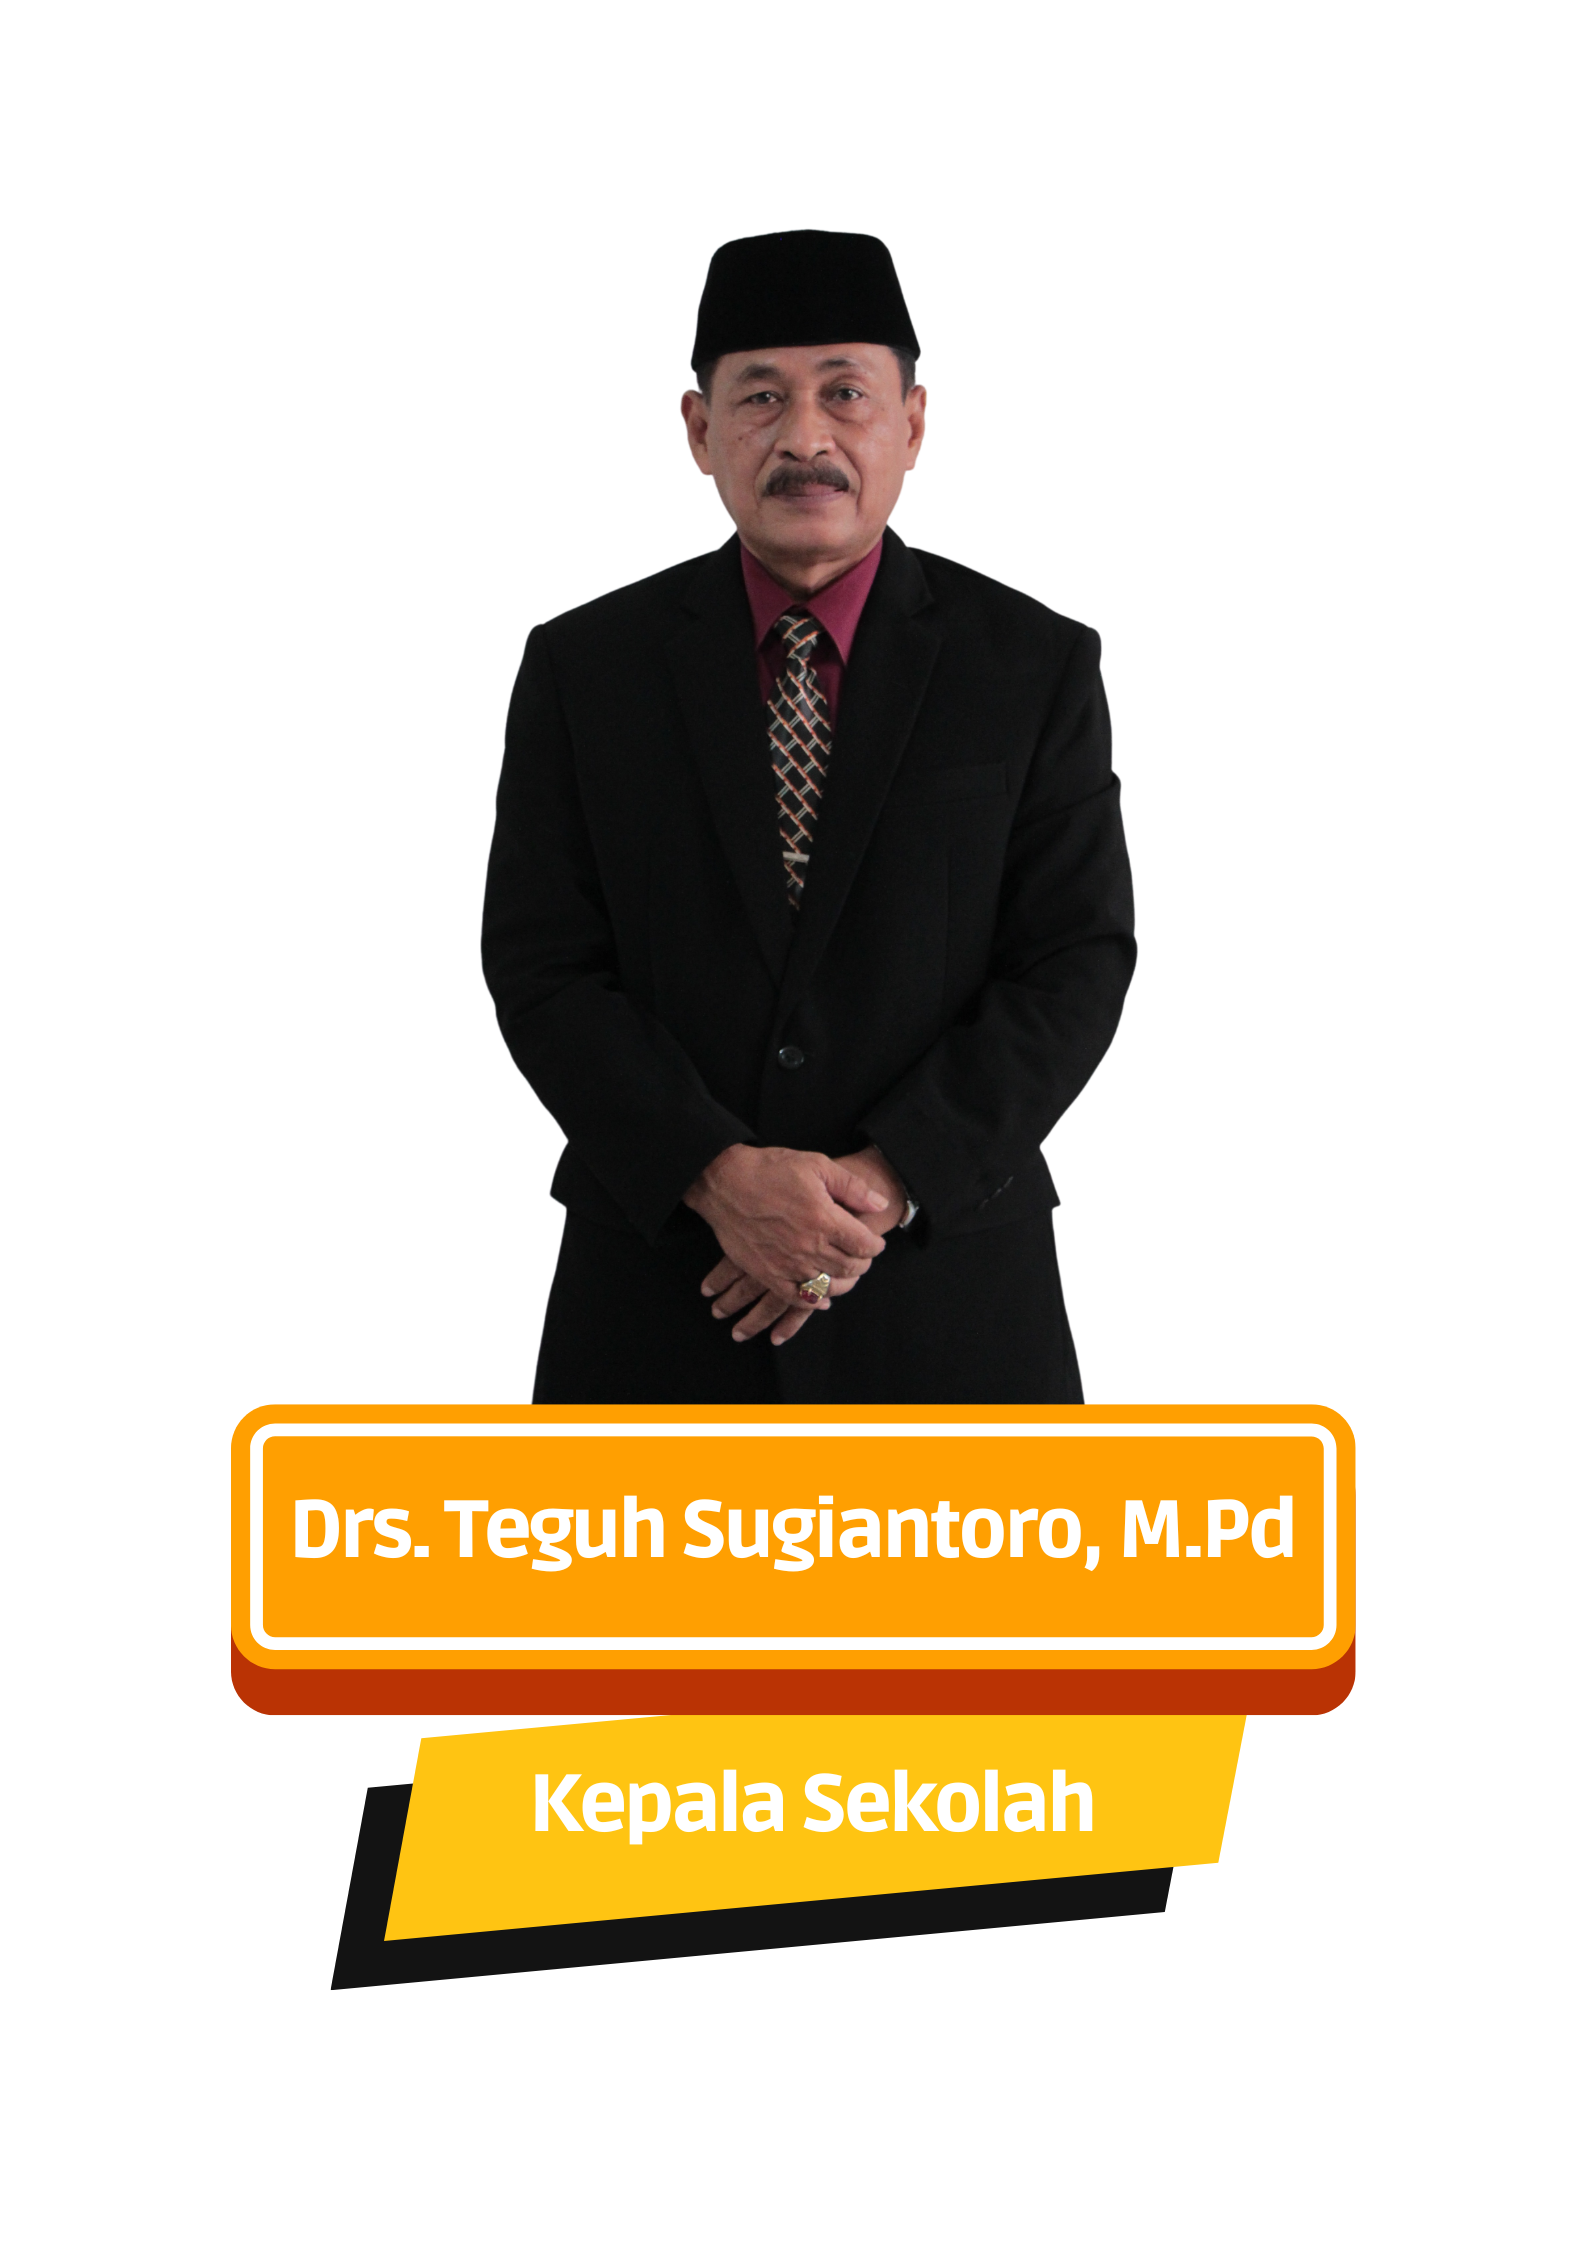 Drs. Teguh Sugiantoro, M.Pd